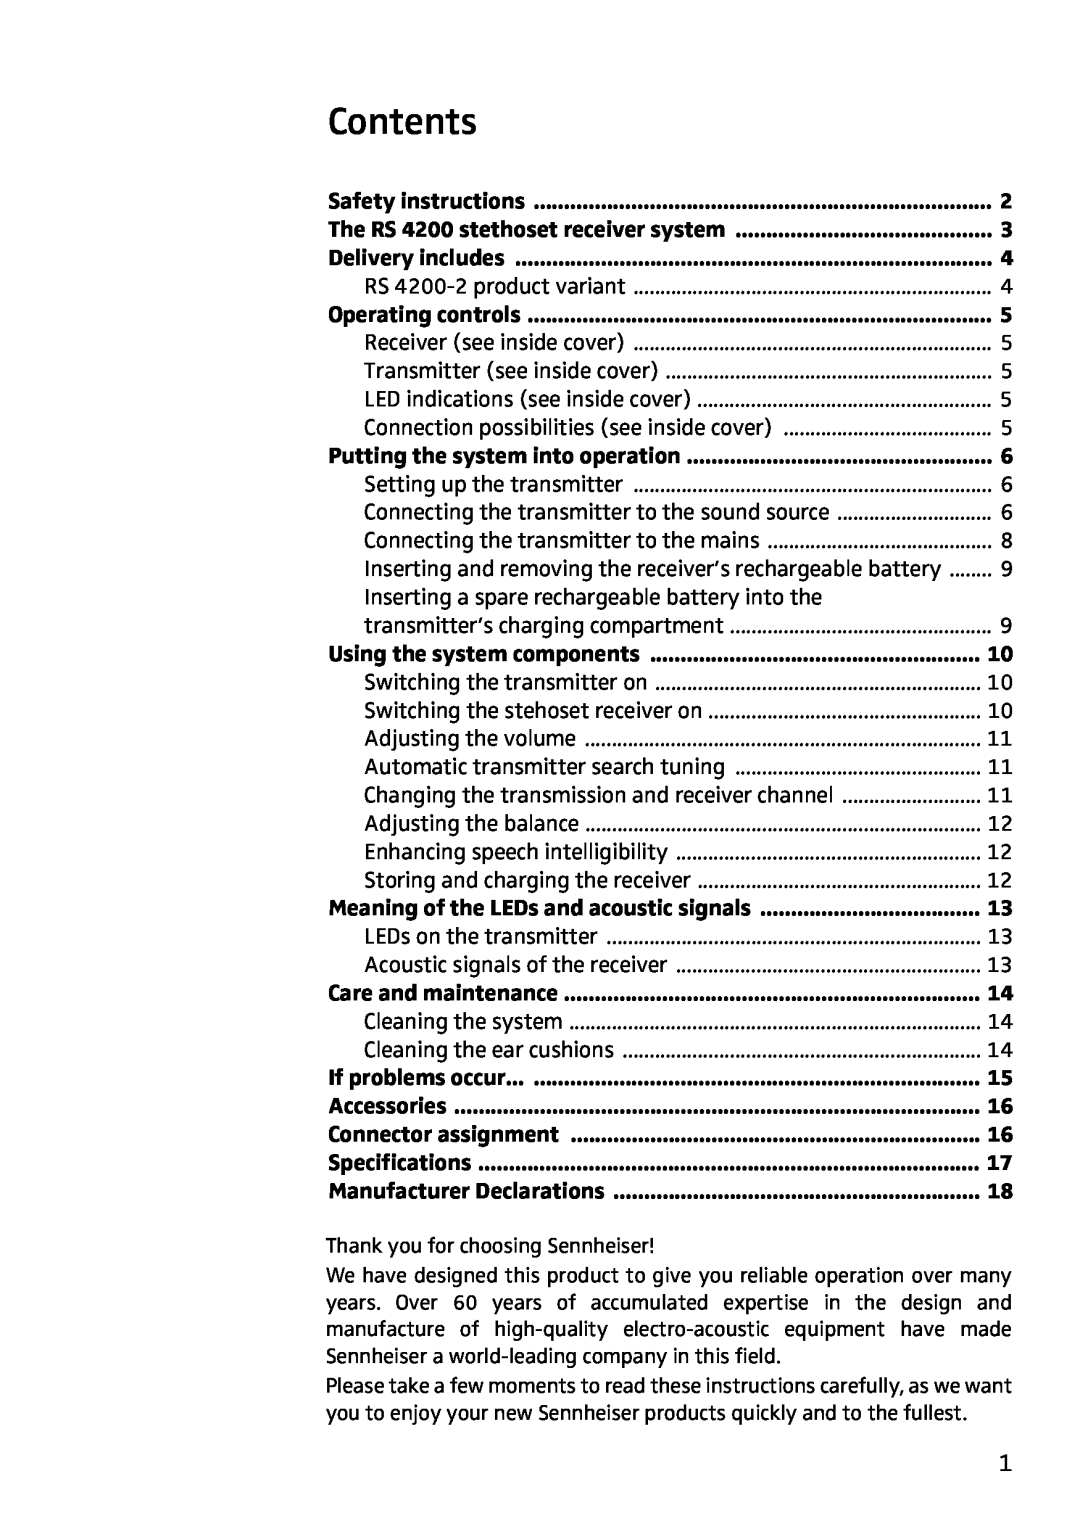 Sennheiser RS4200 manual Contents 